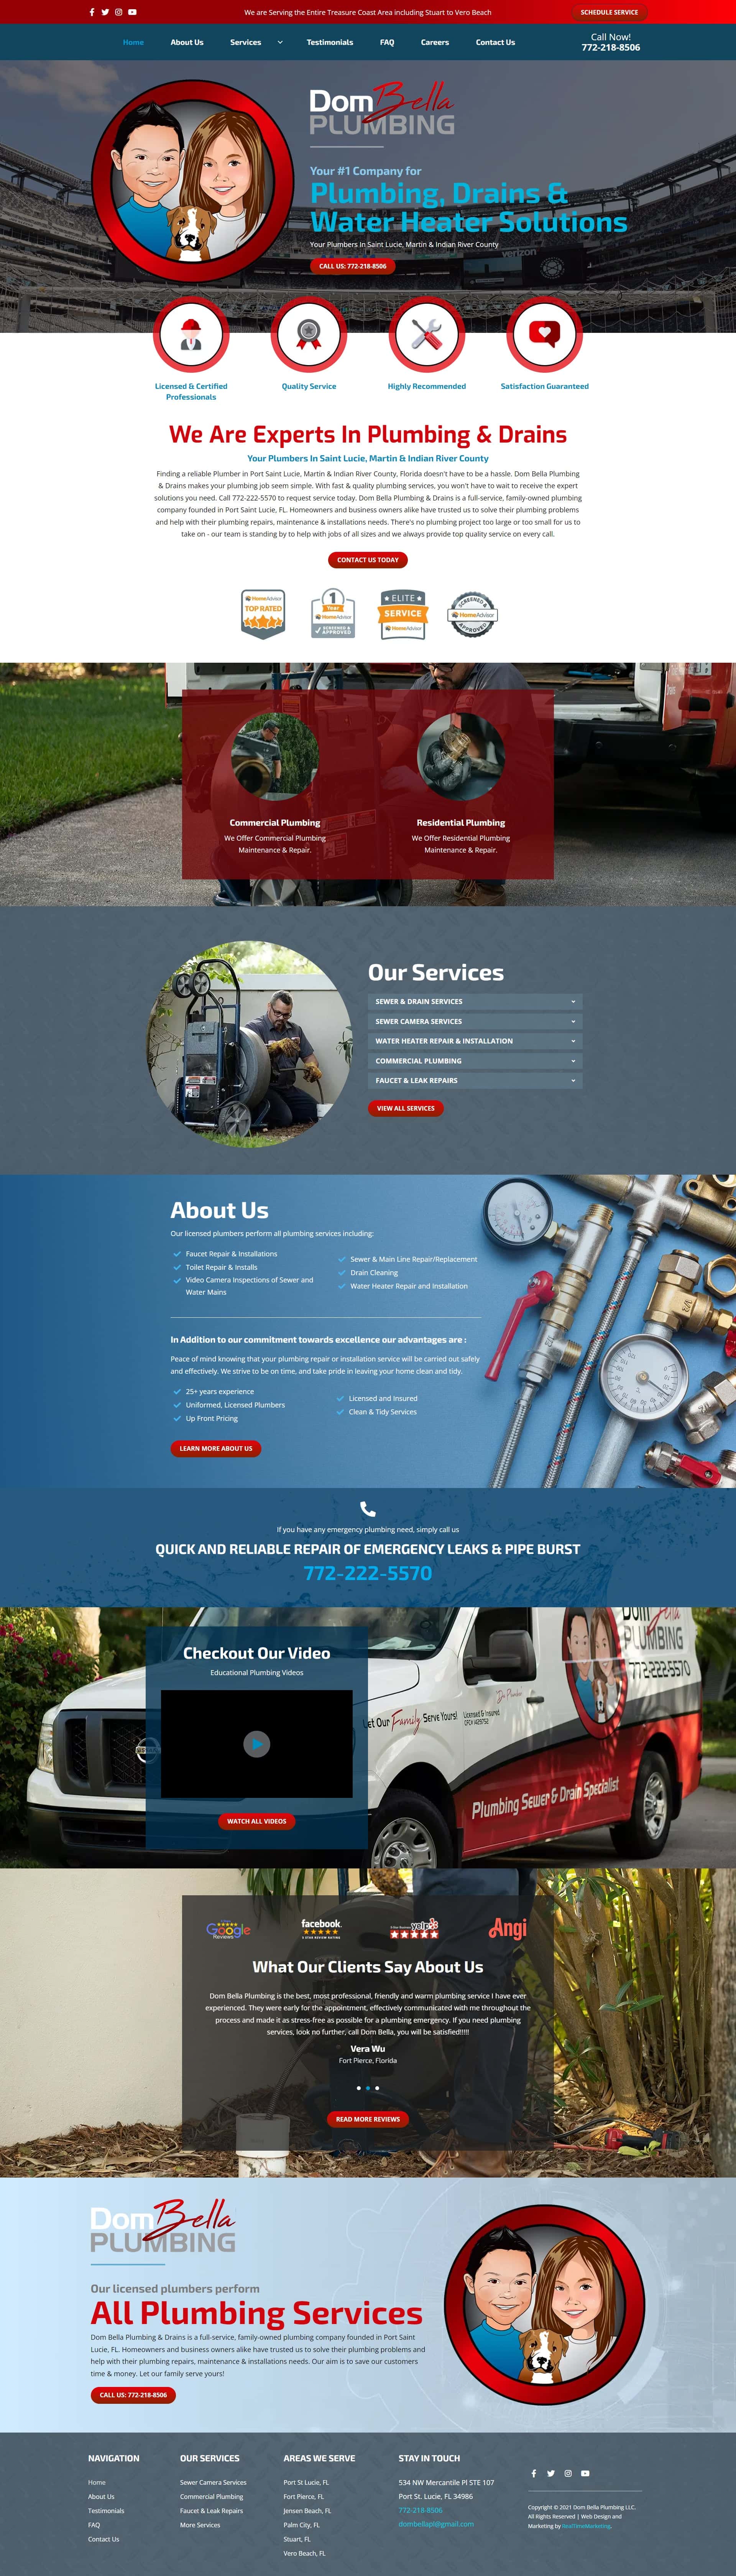 Dom Bella Plumbing Web Page Design